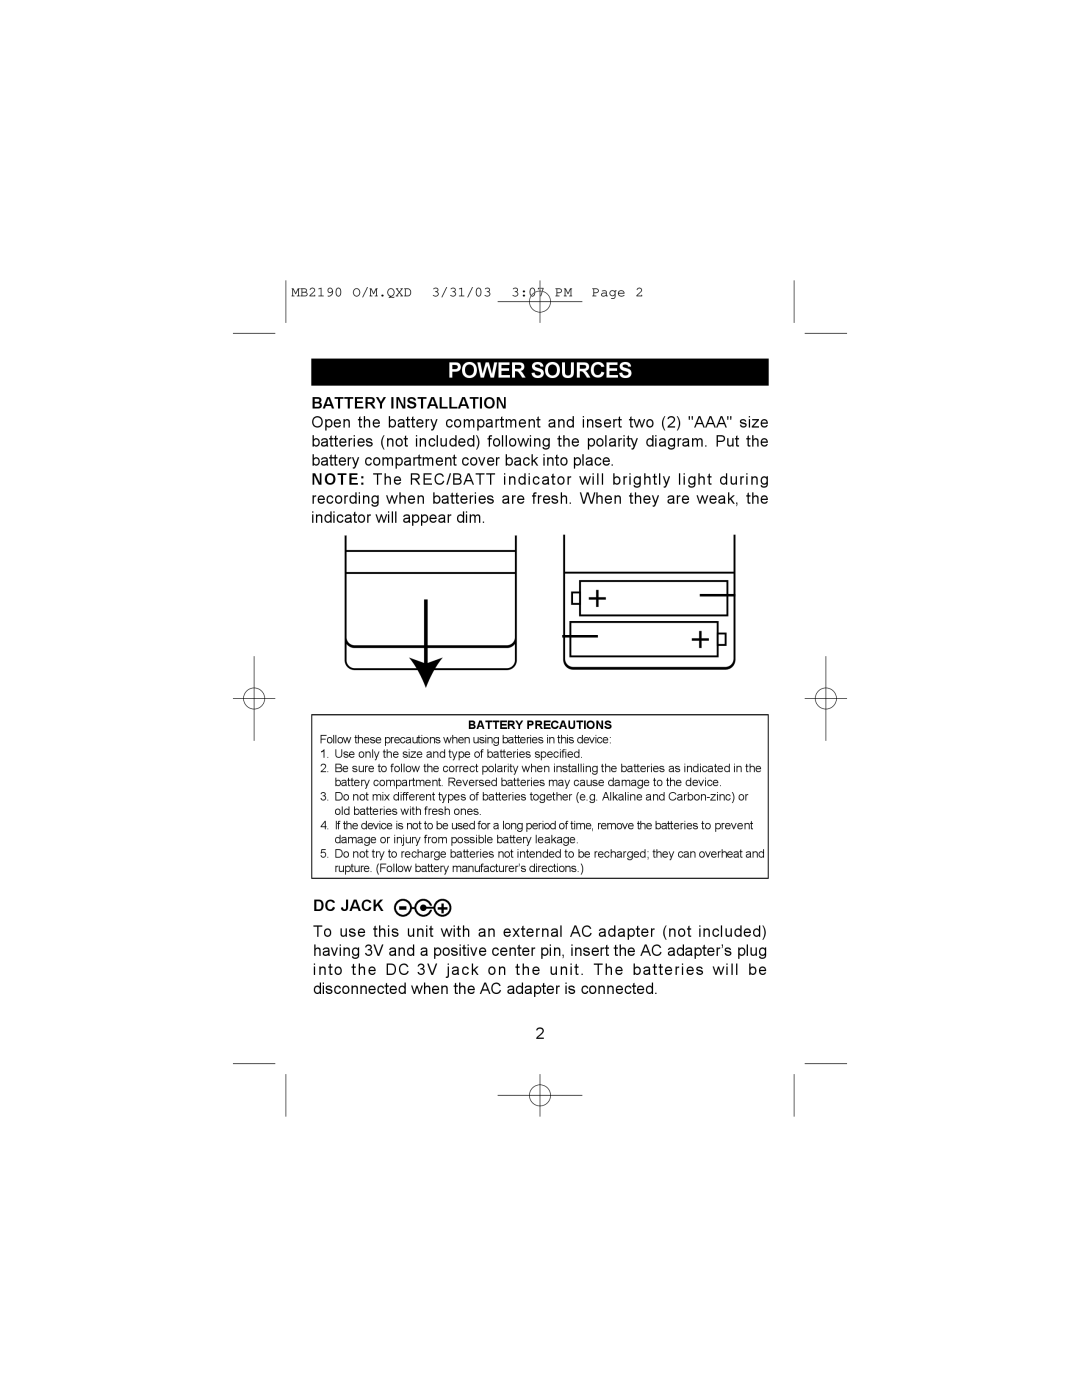 Memorex MB2190 manual Power Sources, Battery Installation, Dc Jack - + 